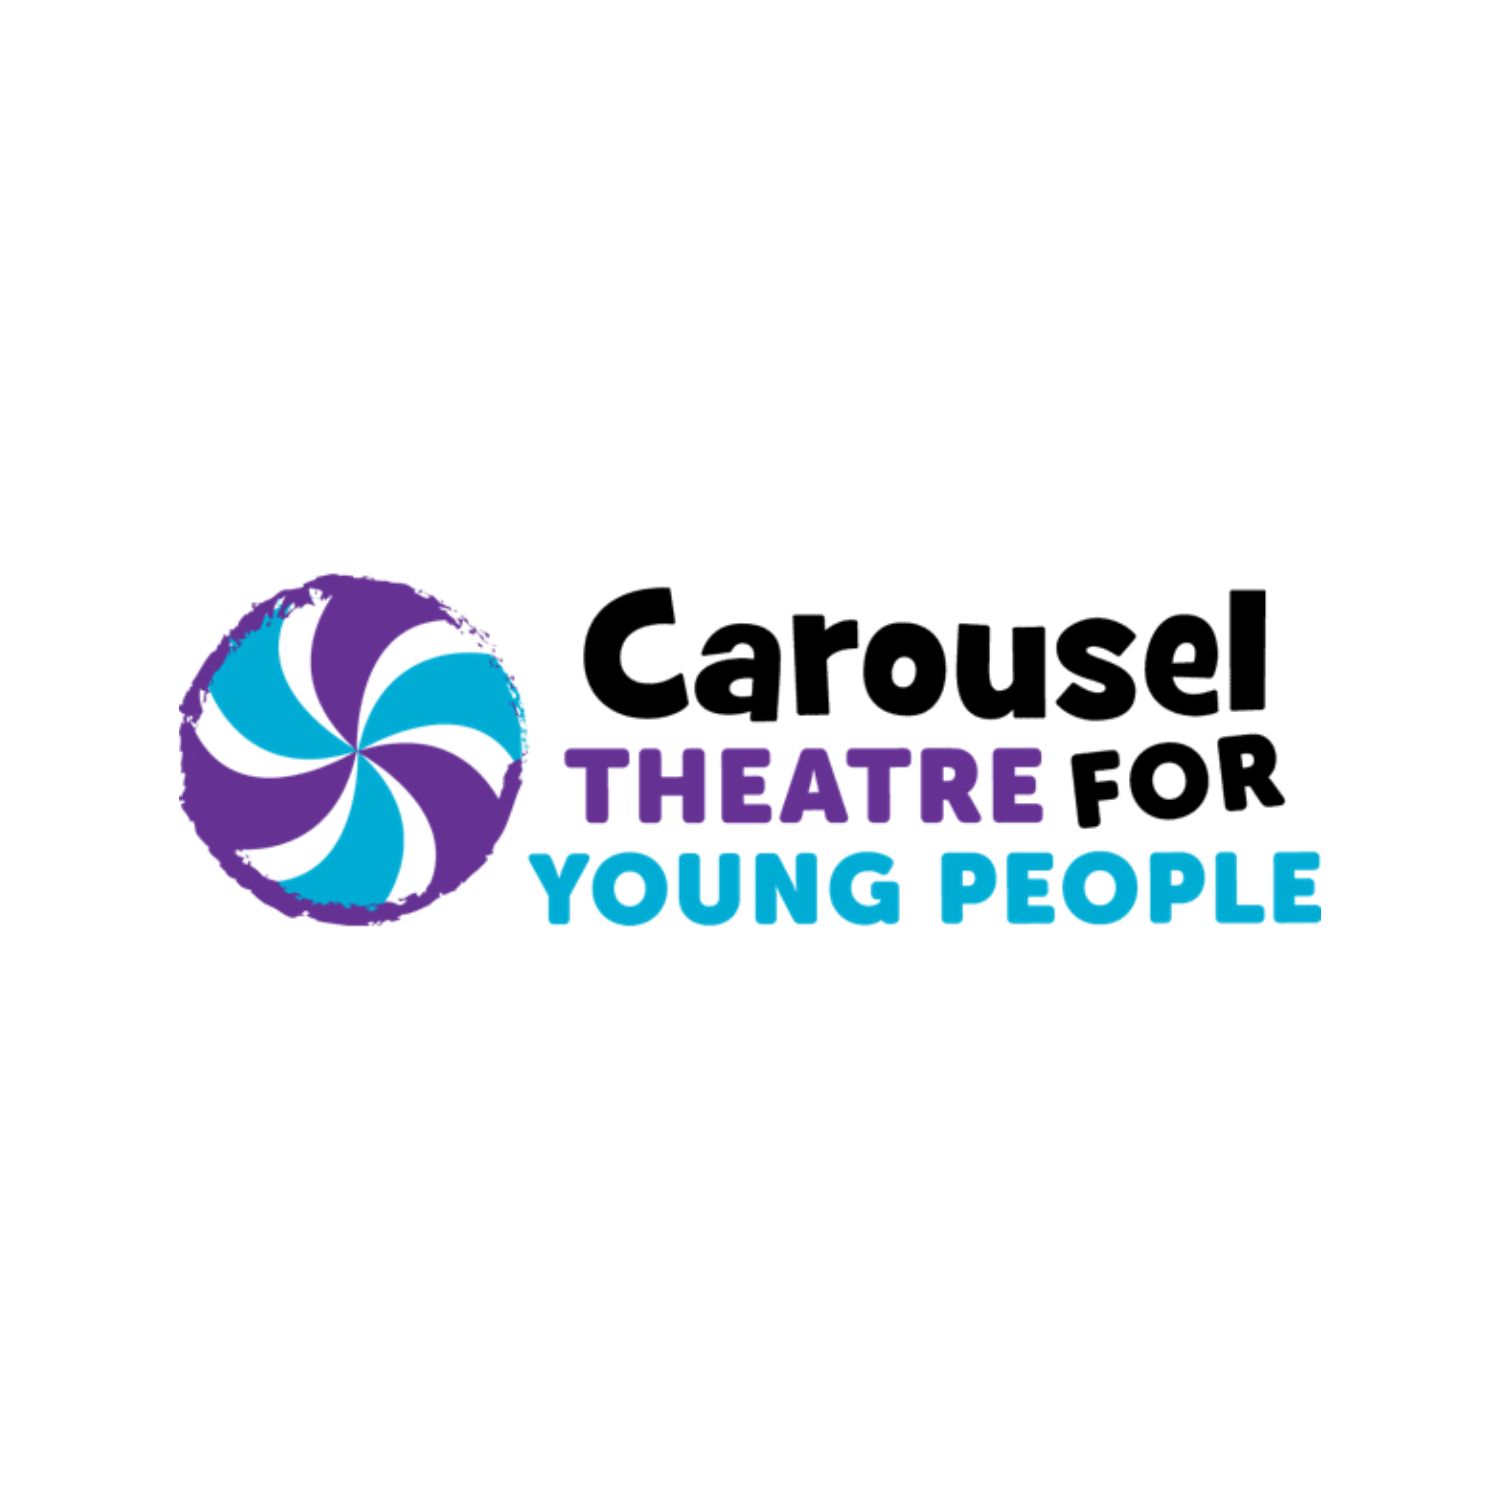 Carousel Theatre